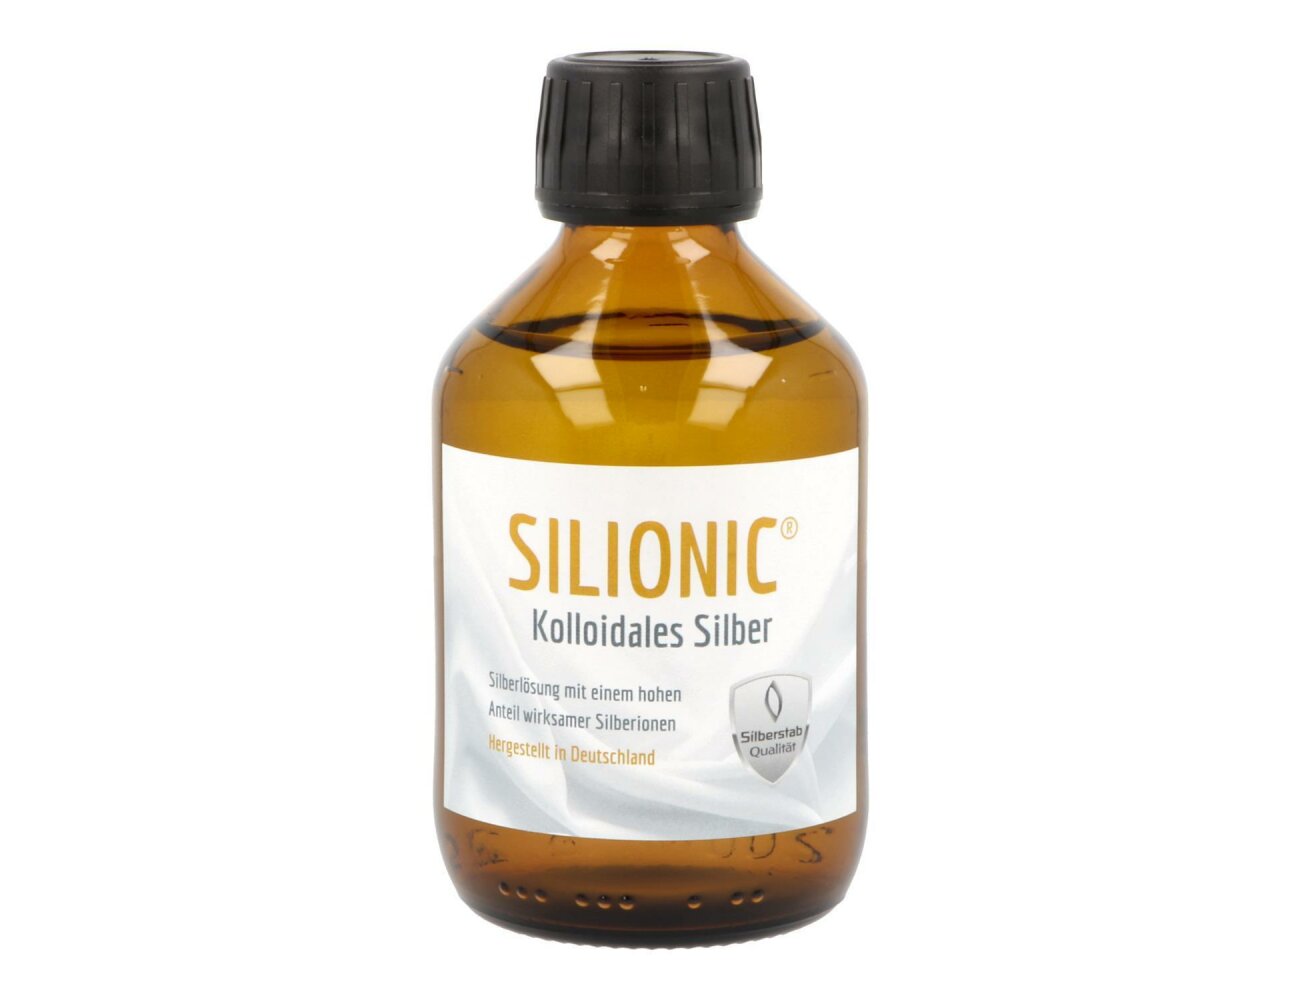 Silionic Kolloidales Silber, 10 ppm, 200 ml